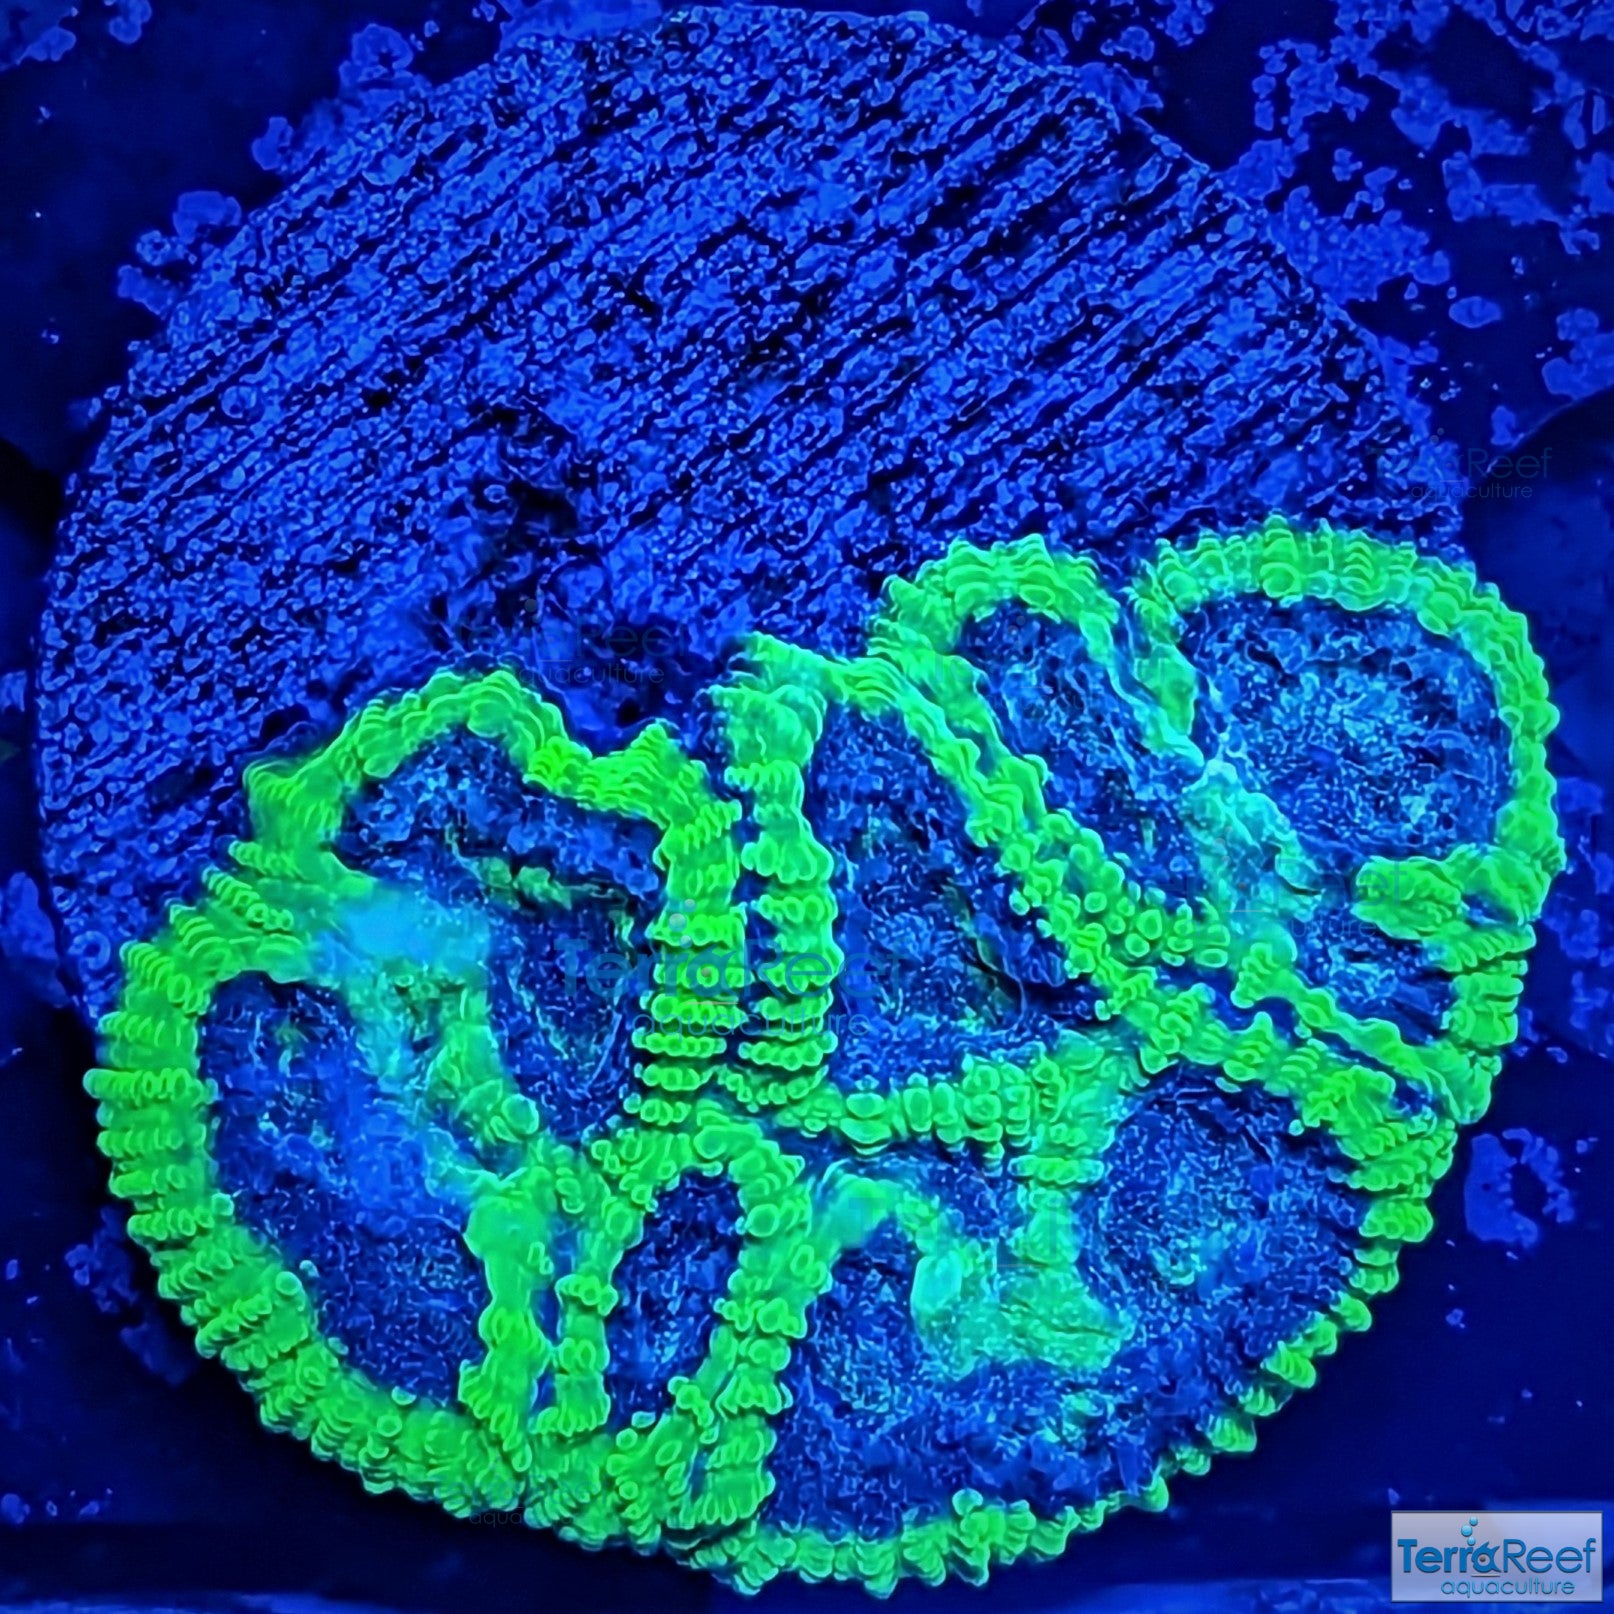 Green Brain Favia Favites Coral Frag WYSIWYG Frag 33 Tiny